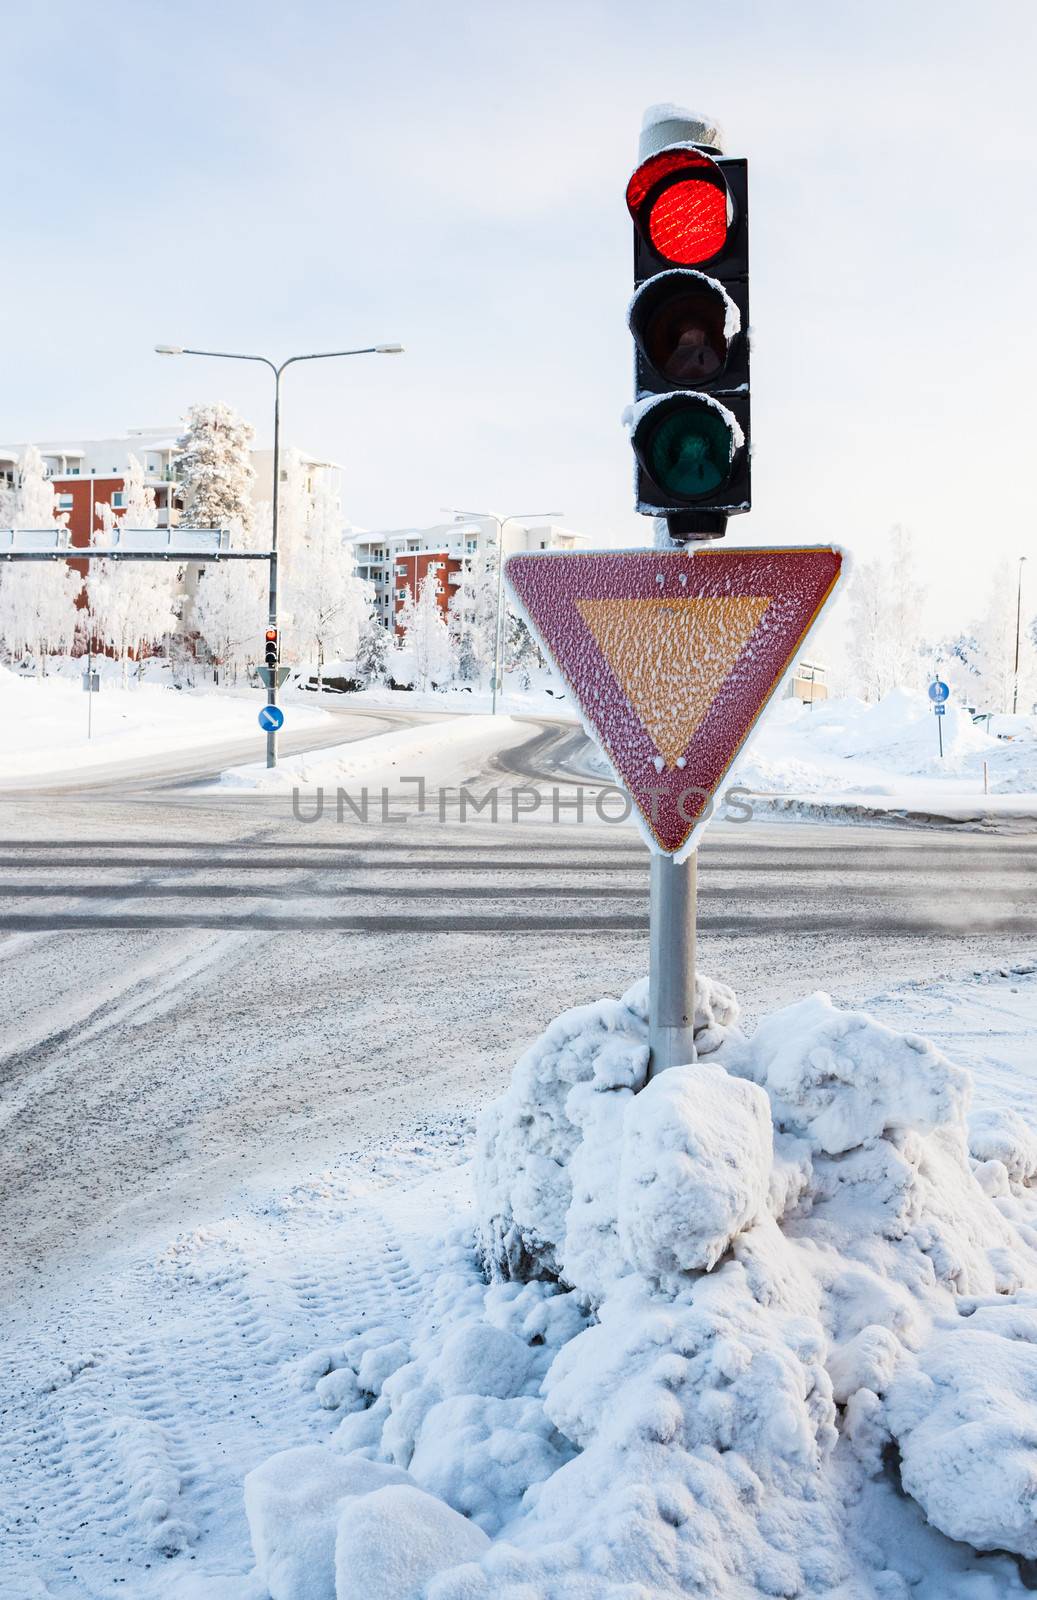 Red traffic light at winter by juhku